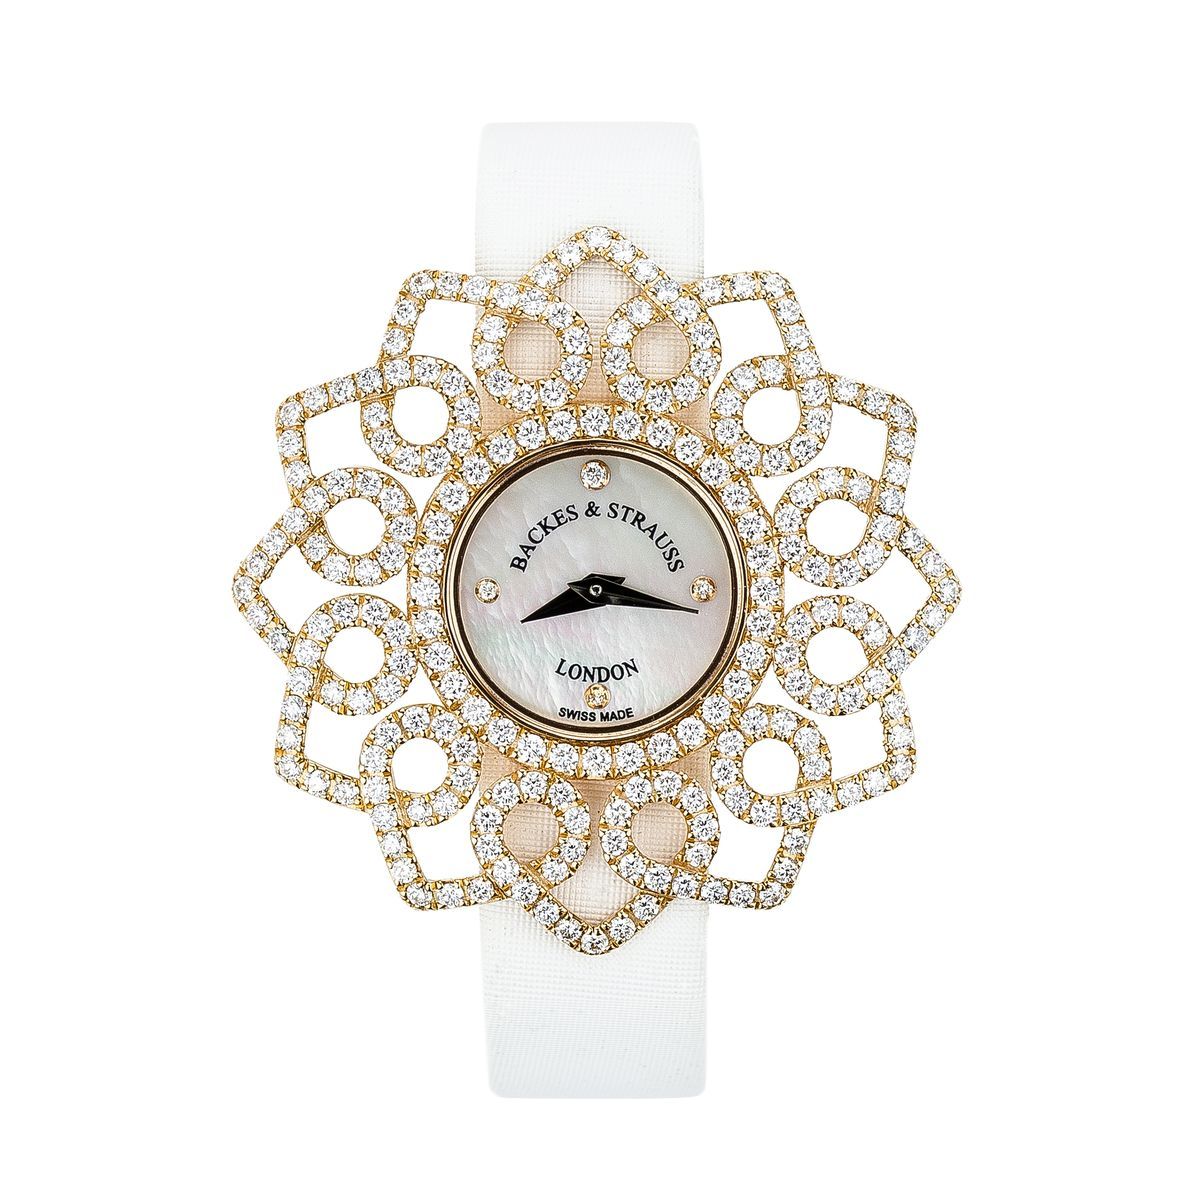 Backes & Strauss - Victoria Snowdrop Luxury Diamond Watch for Women - Rose Gold - Face